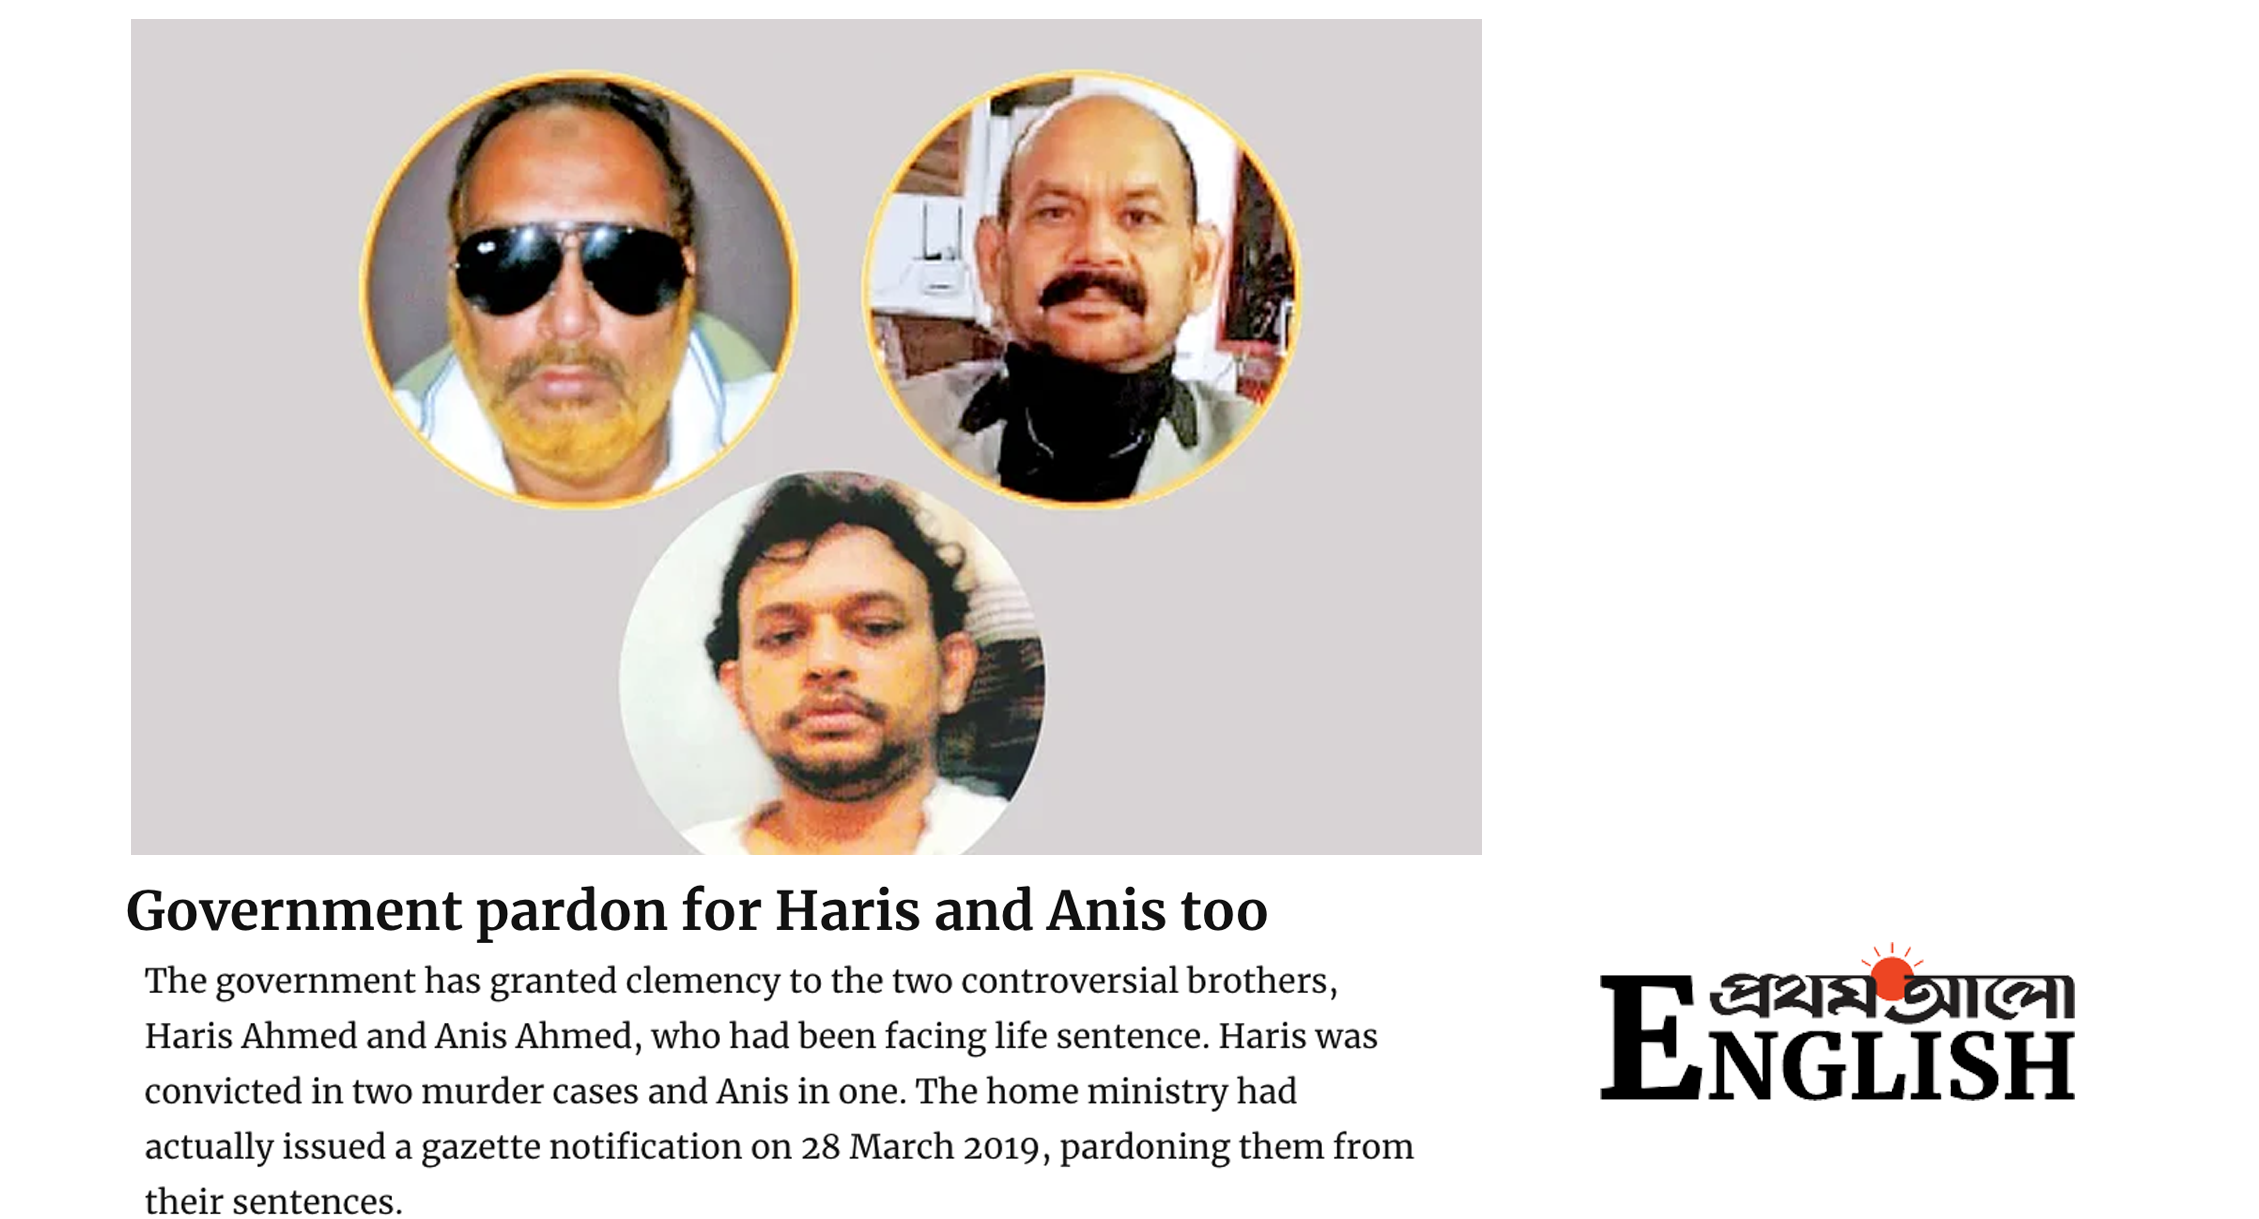 Bangladesh government pardons Haris Ahmed and Anis Ahmed, who had been facing life sentence.